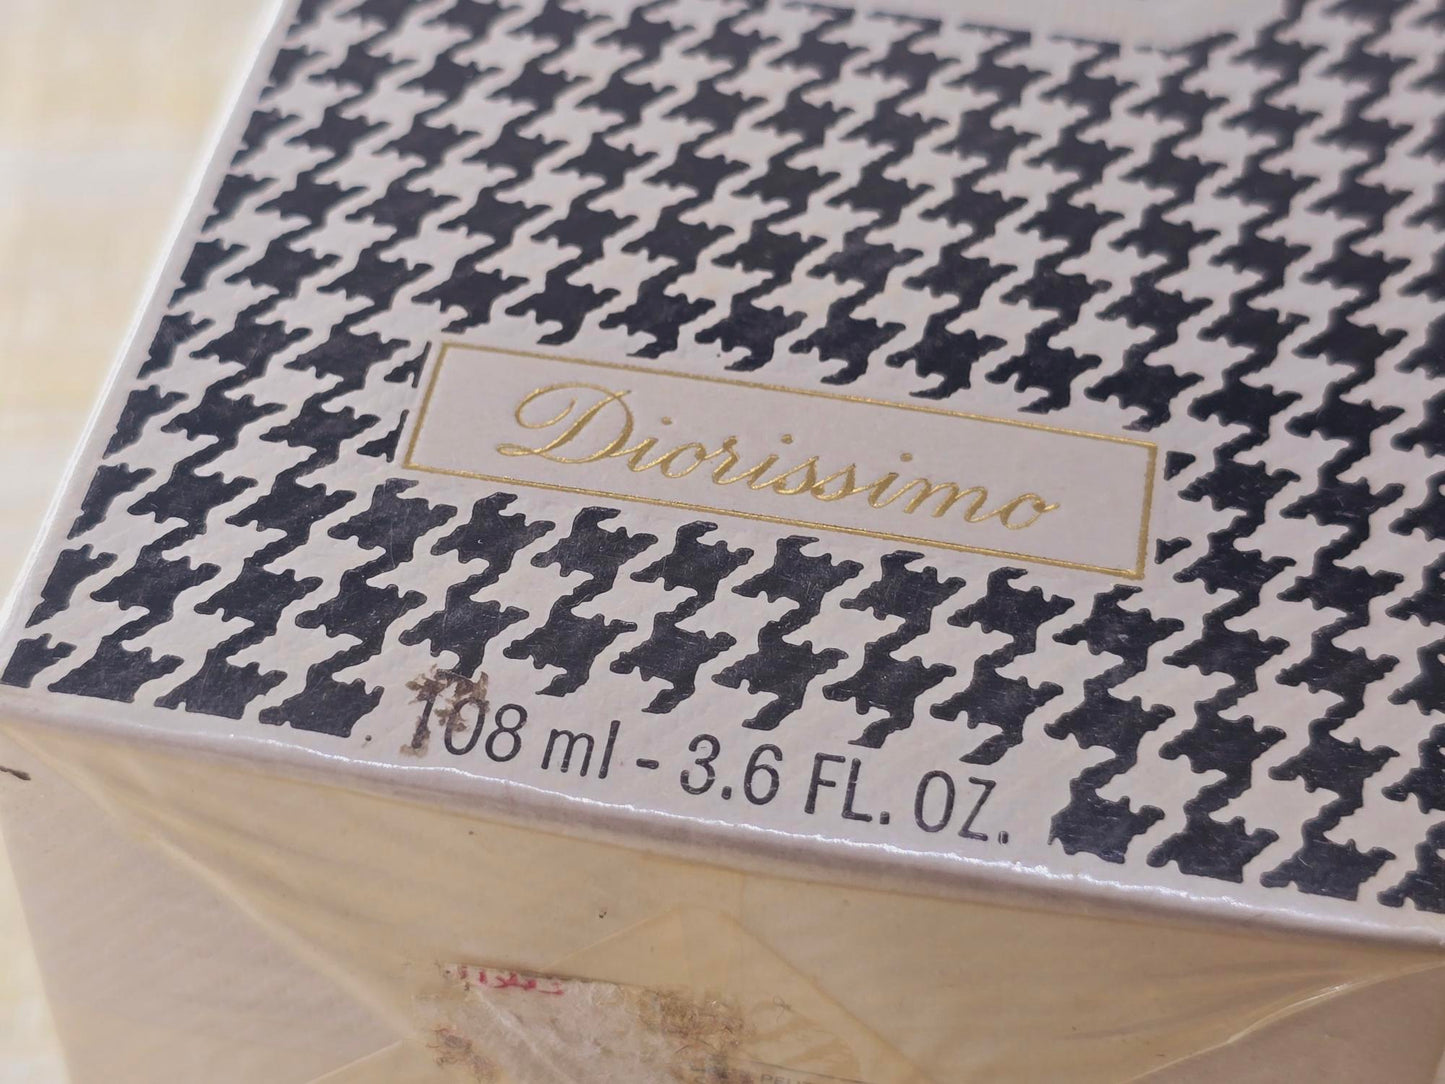 Christian Dior Diorissimo EDC Splash 108 ml 3.6 oz OR 54 ml 1.8 oz, Vintage, Rare, Sealed